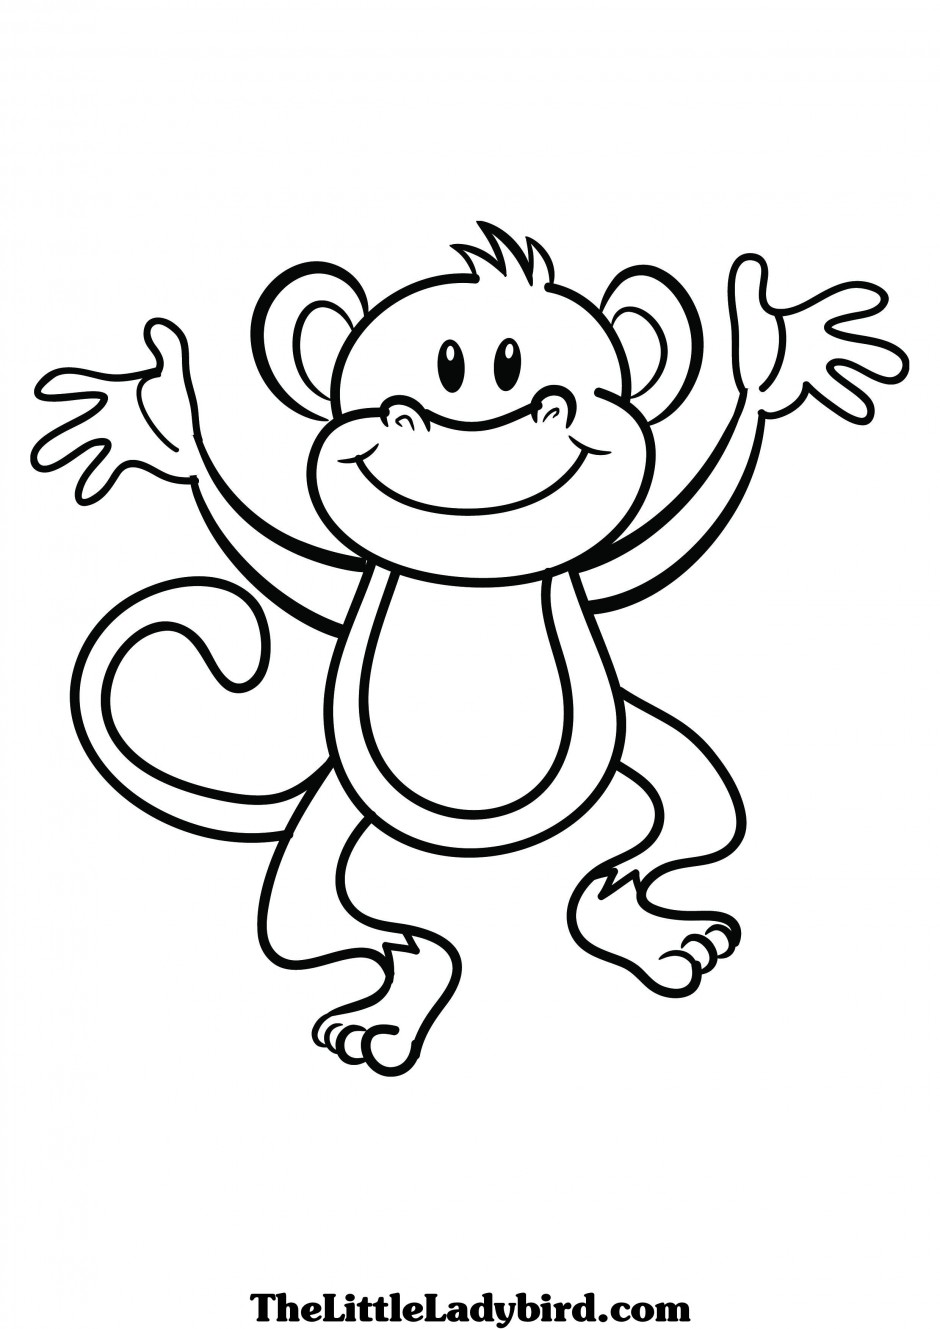 Free Monkey Cartoon Black And White, Download Free Monkey Cartoon Black